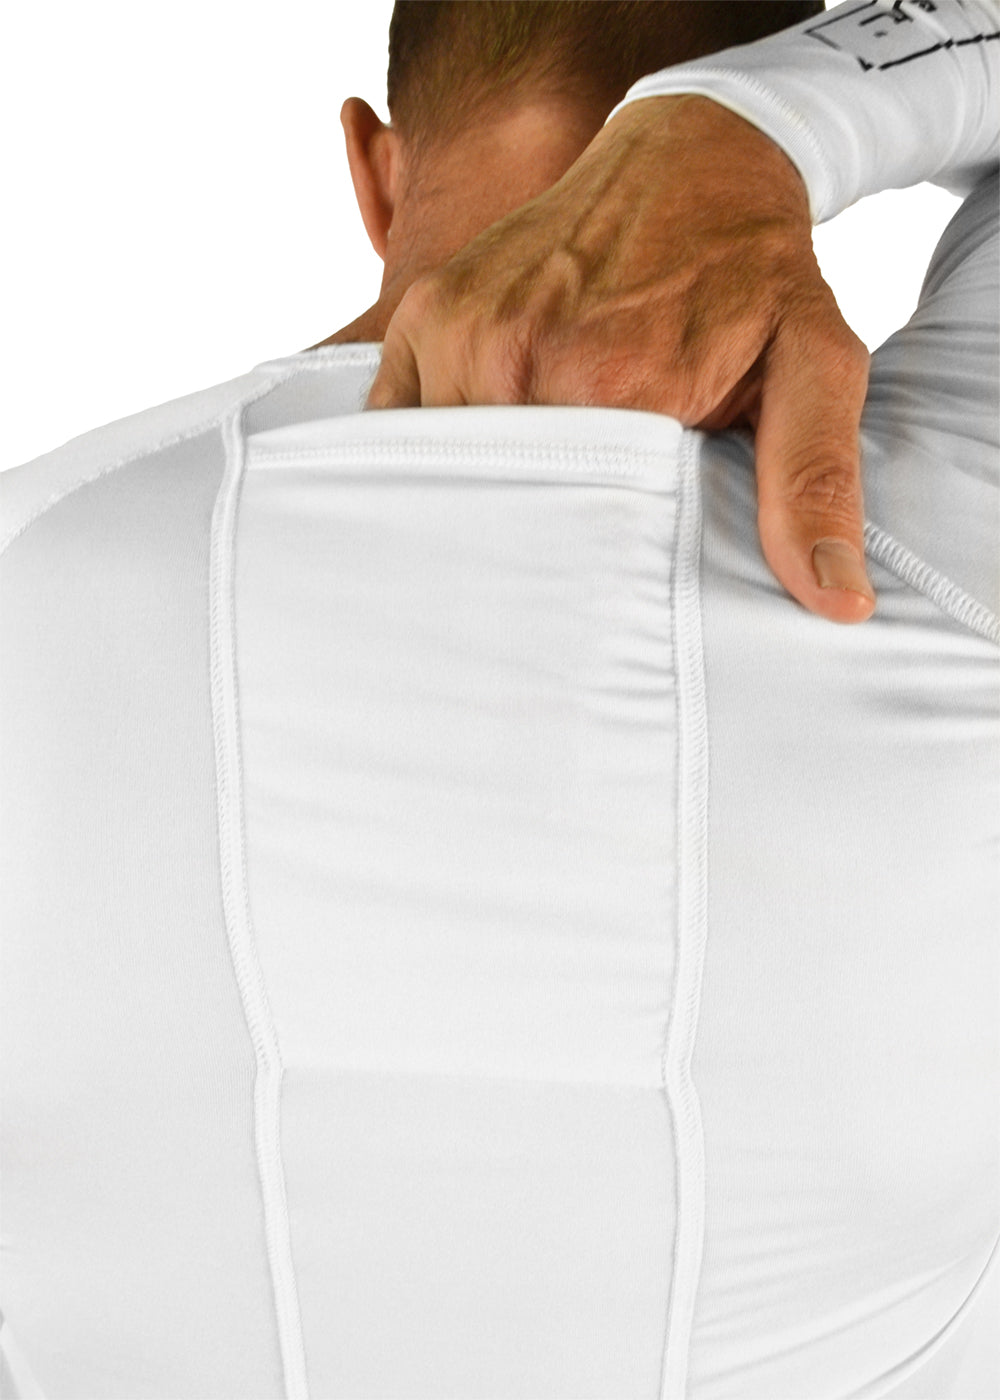 NK basketball arm guard ice silk male elbow sport sweat absorbentsunscreen arm  sleeve